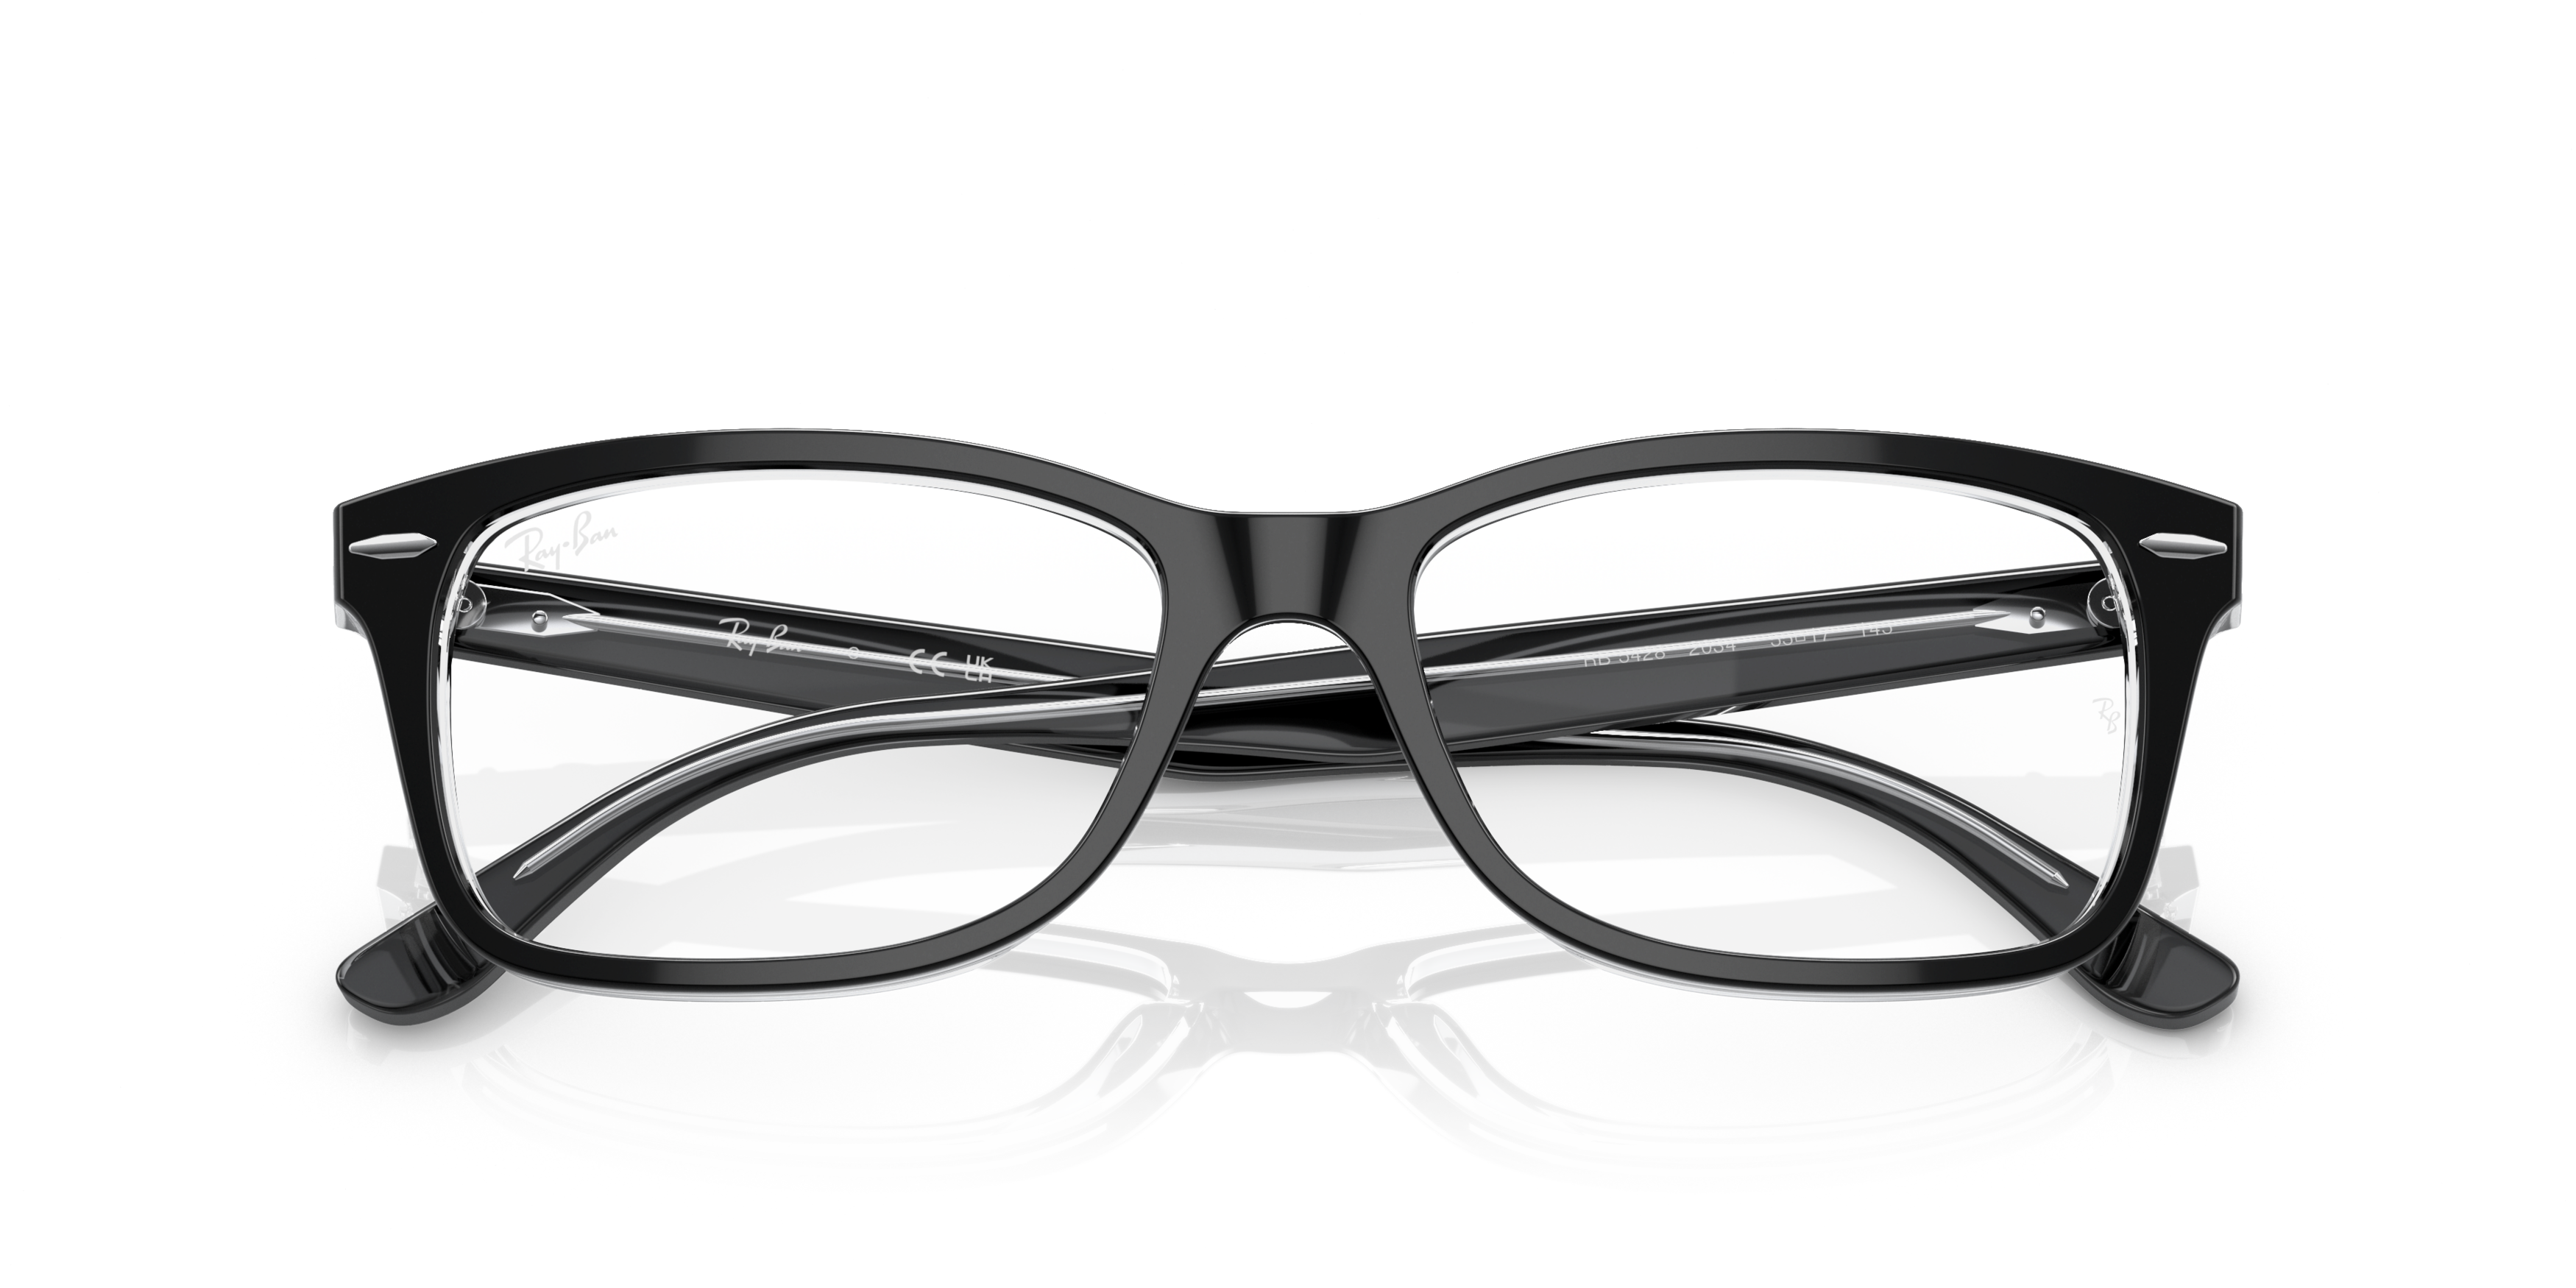 Folded Ray-Ban RX 5428 (2034) Glasses Transparent / Black